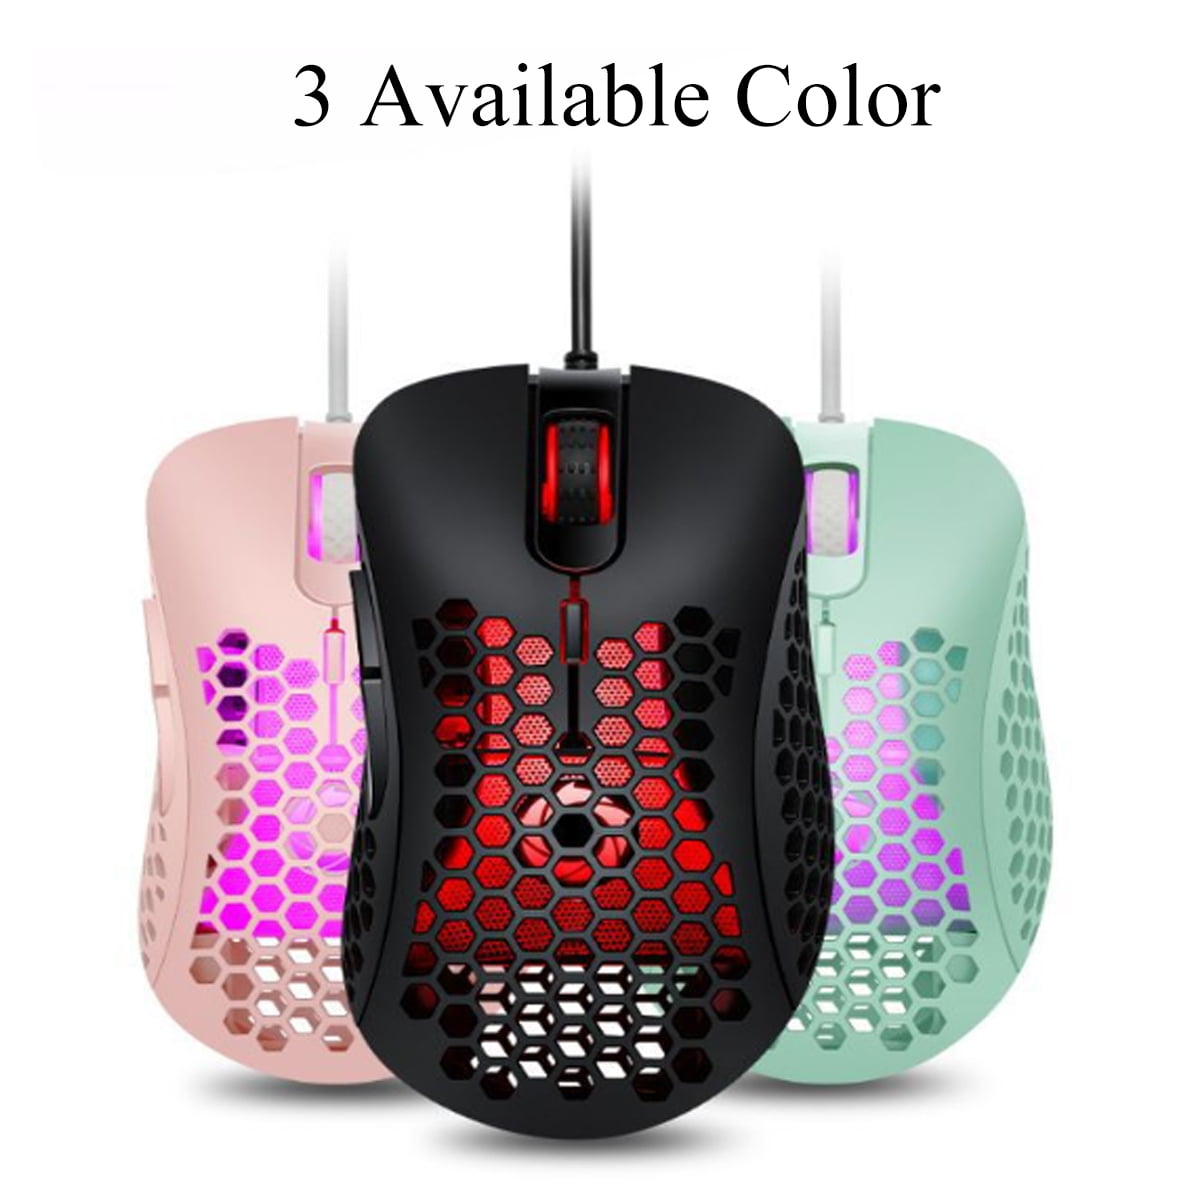 Breathing color lights Ergonomic Adjustable DPI,6 Buttons Gaming Mouse 